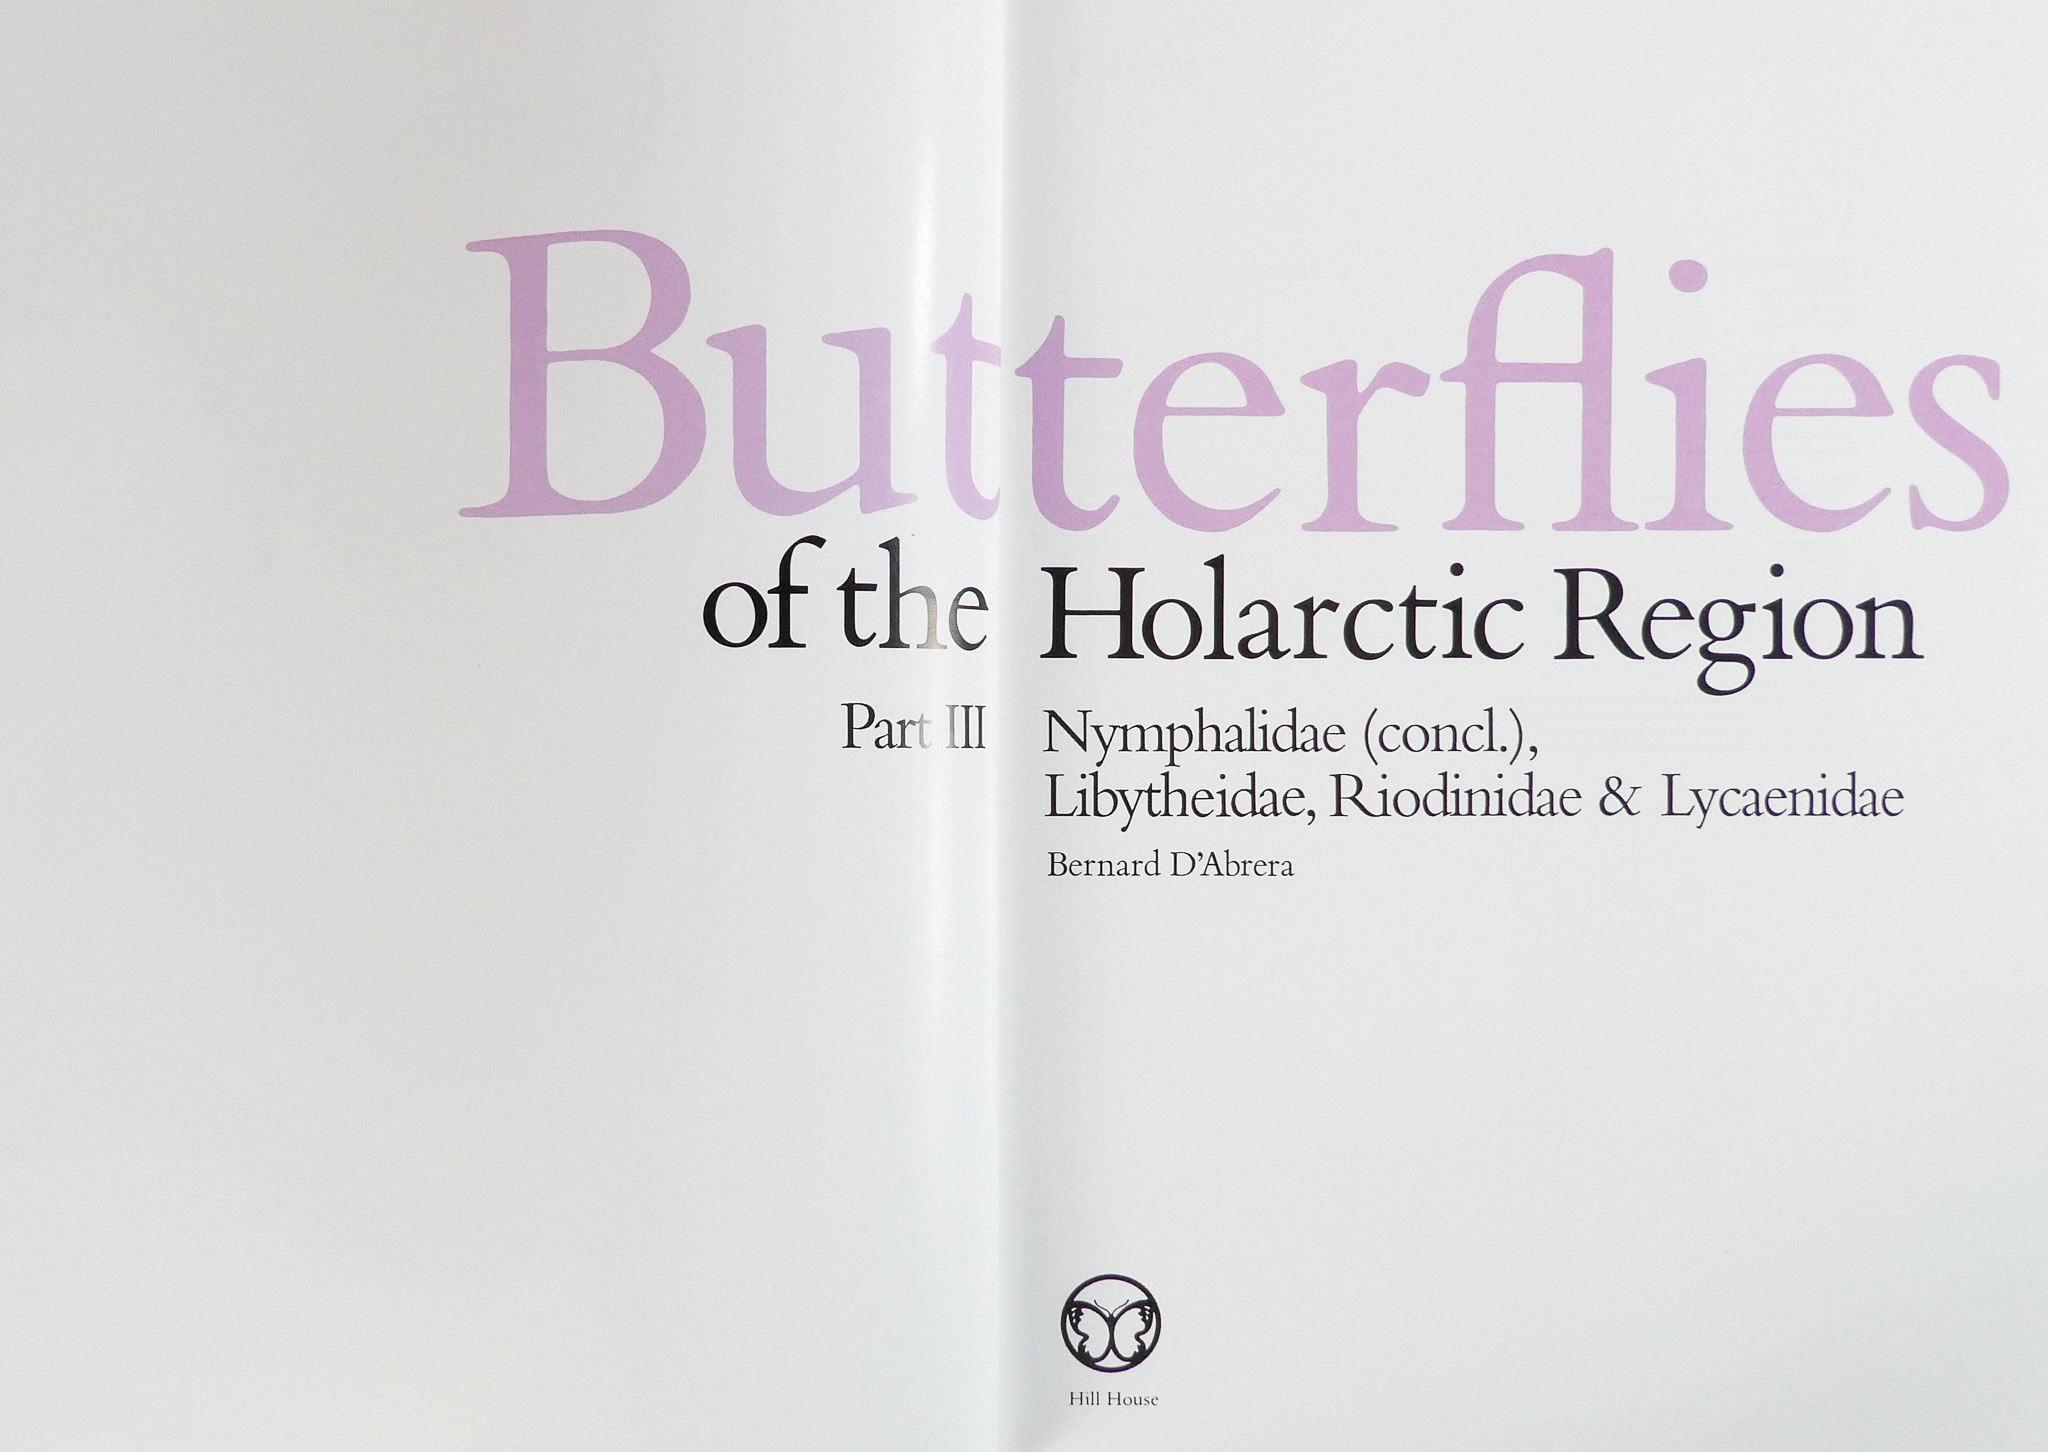 D'ABRERA Bernard, Butterflies of the Holarctic Region - Hill House 1993, three volumes cloth binding - Image 9 of 10